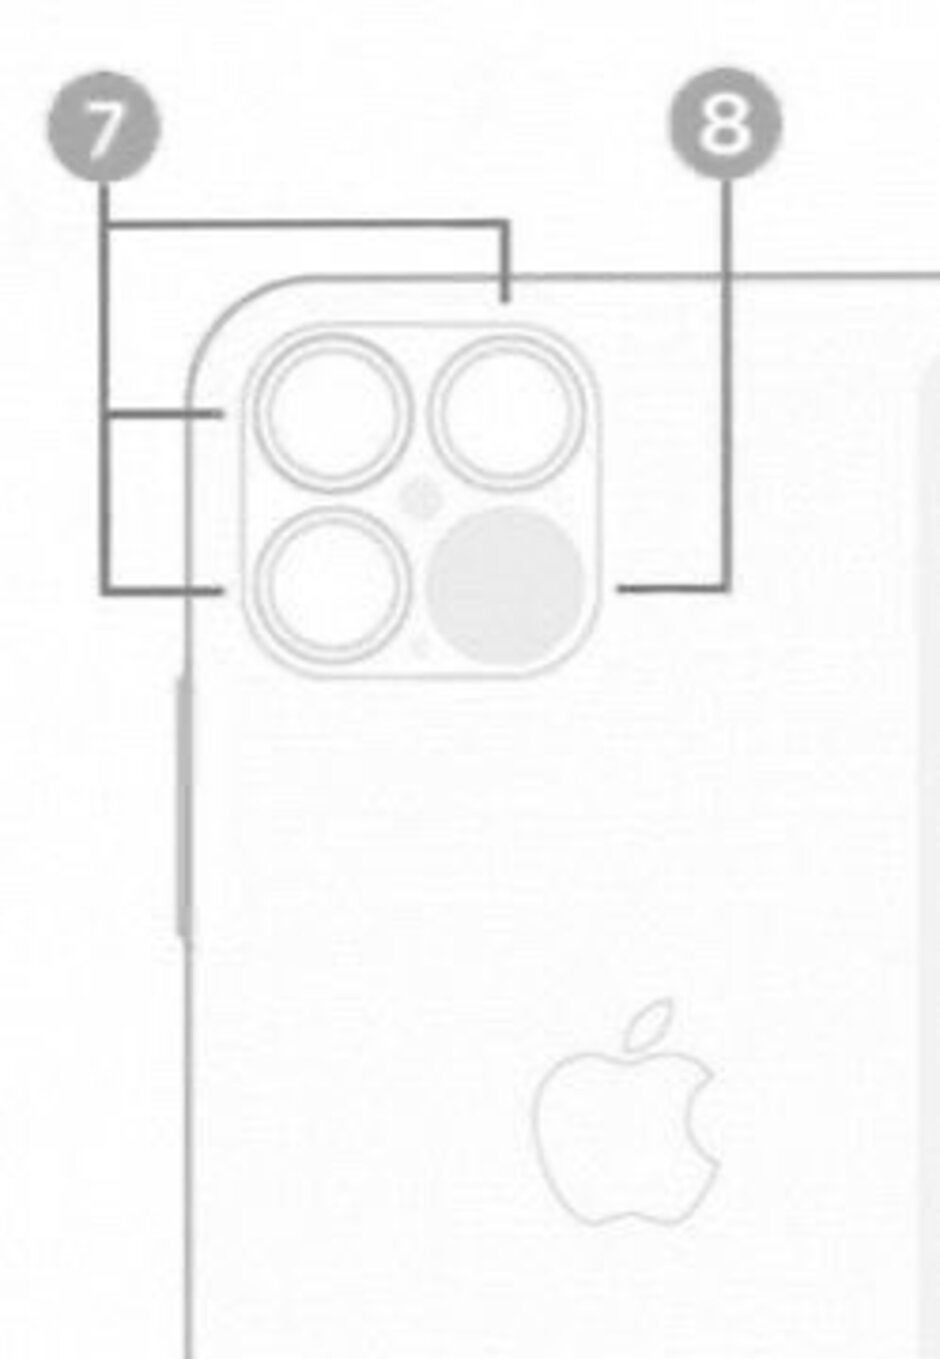 Major iPhone 12 Pro 5G leak reveals new camera design and LiDAR scanner